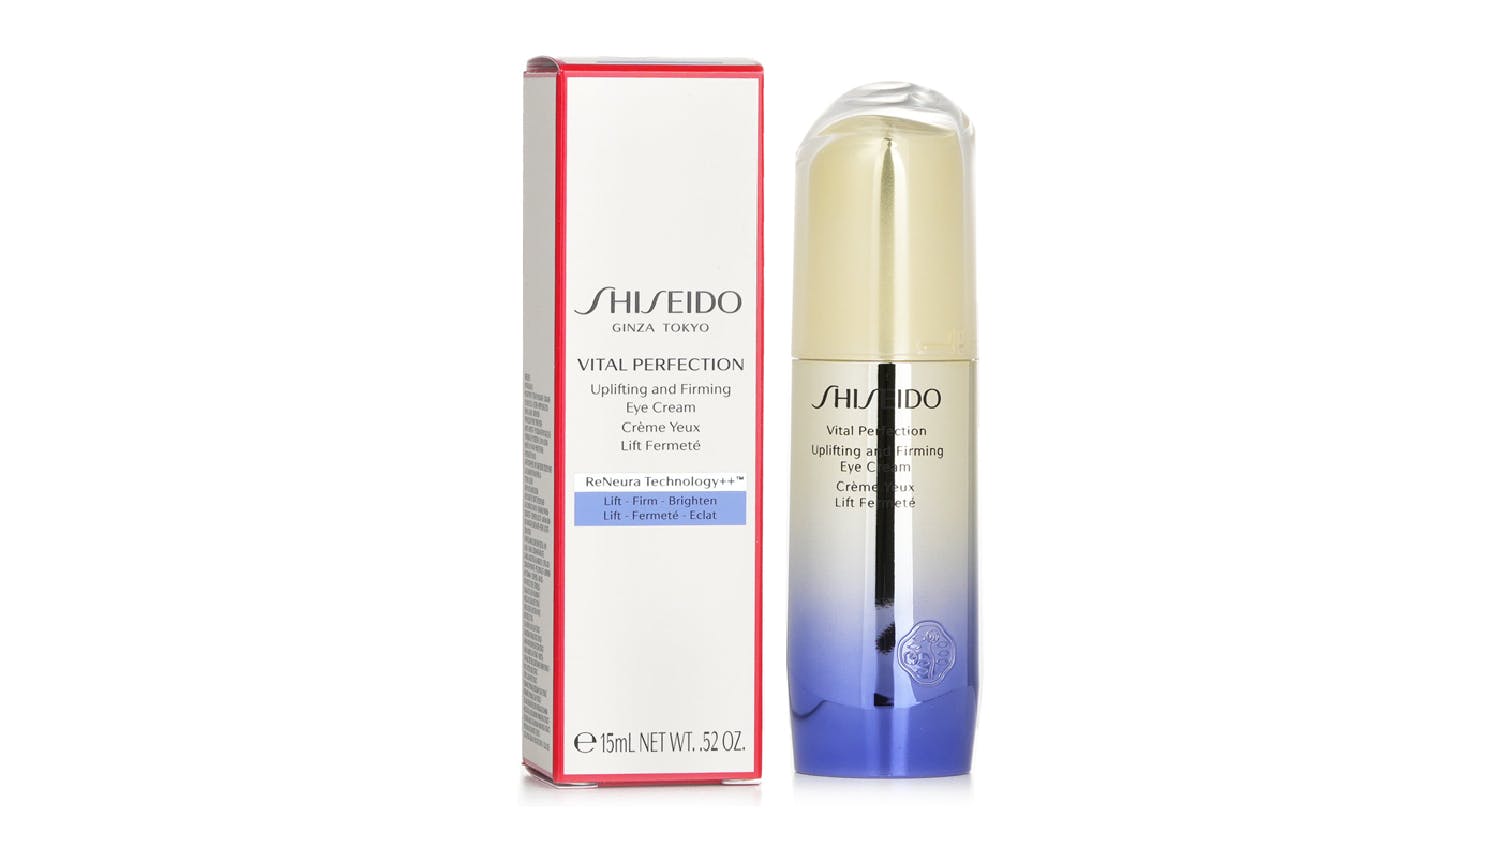 Shiseido Vital Perfection Uplifting and Firming Eye Cream - 15ml/0.52oz